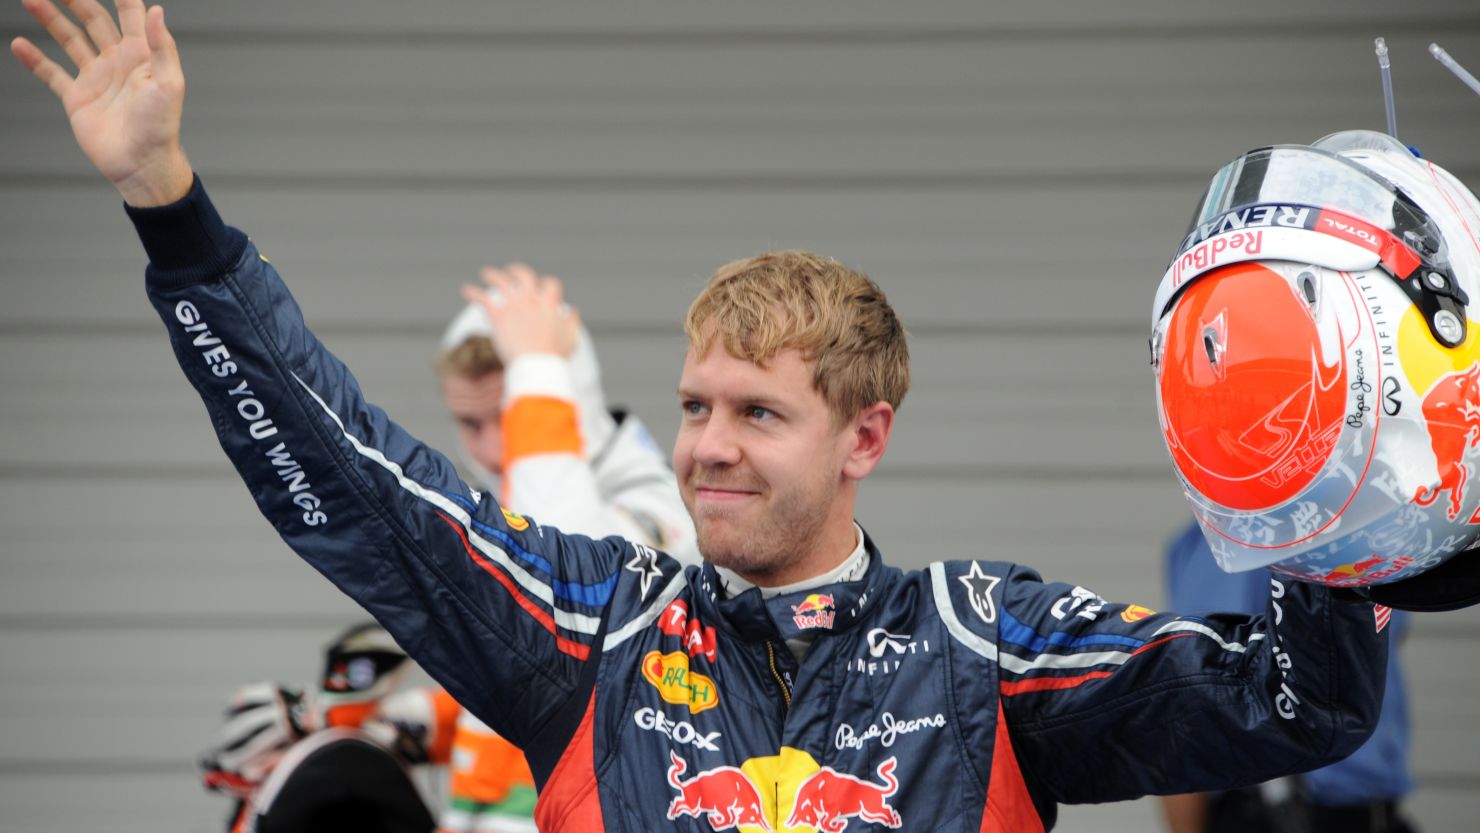 Sebastian Vettel is on pole position for the fourth straight year at Suzuka.